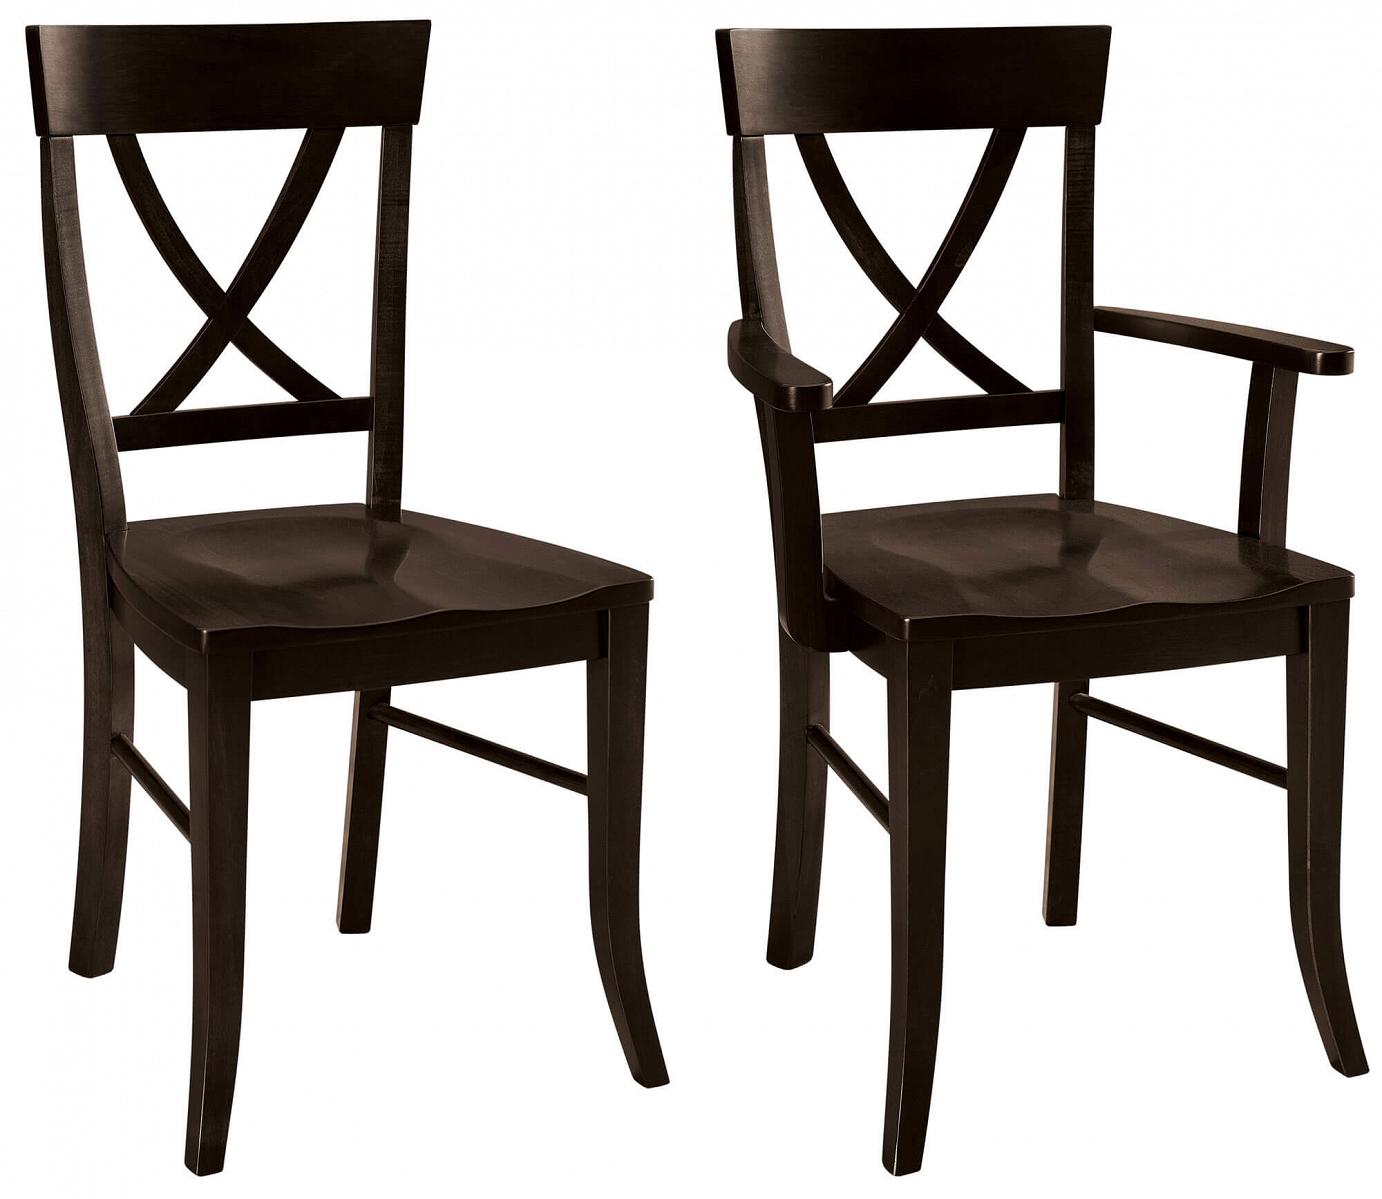 RH Yoder Carmen Chairs